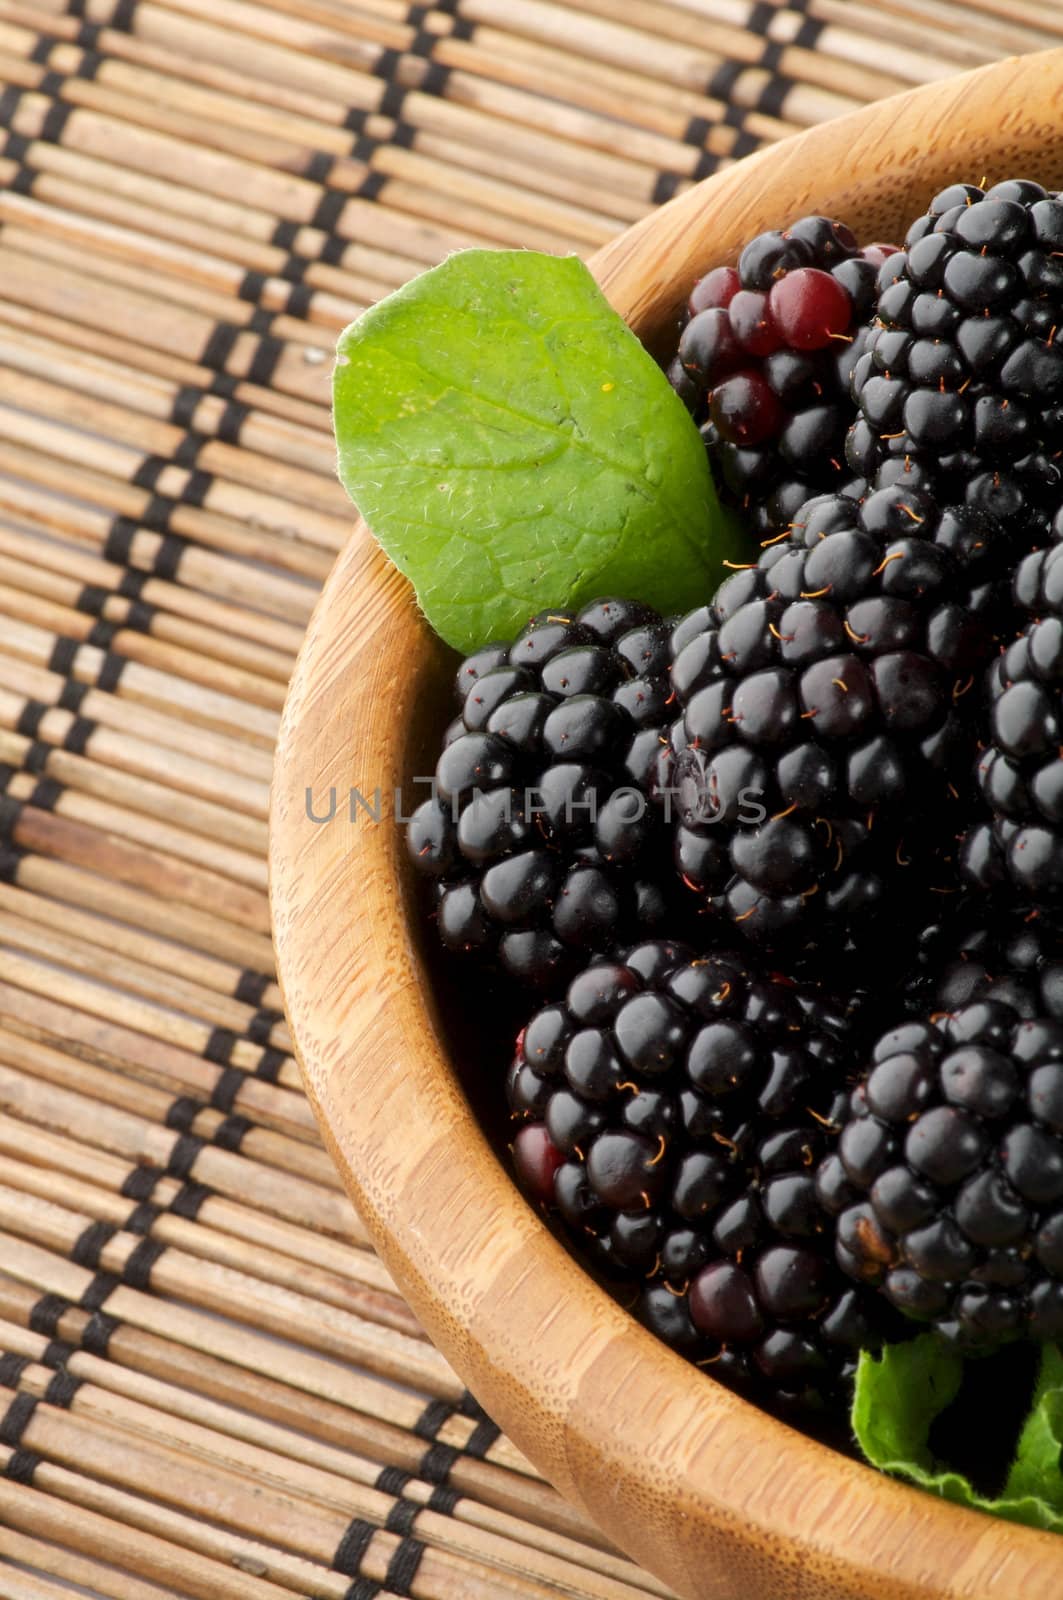 Perfect Blackberries in Wooden Bowl by zhekos